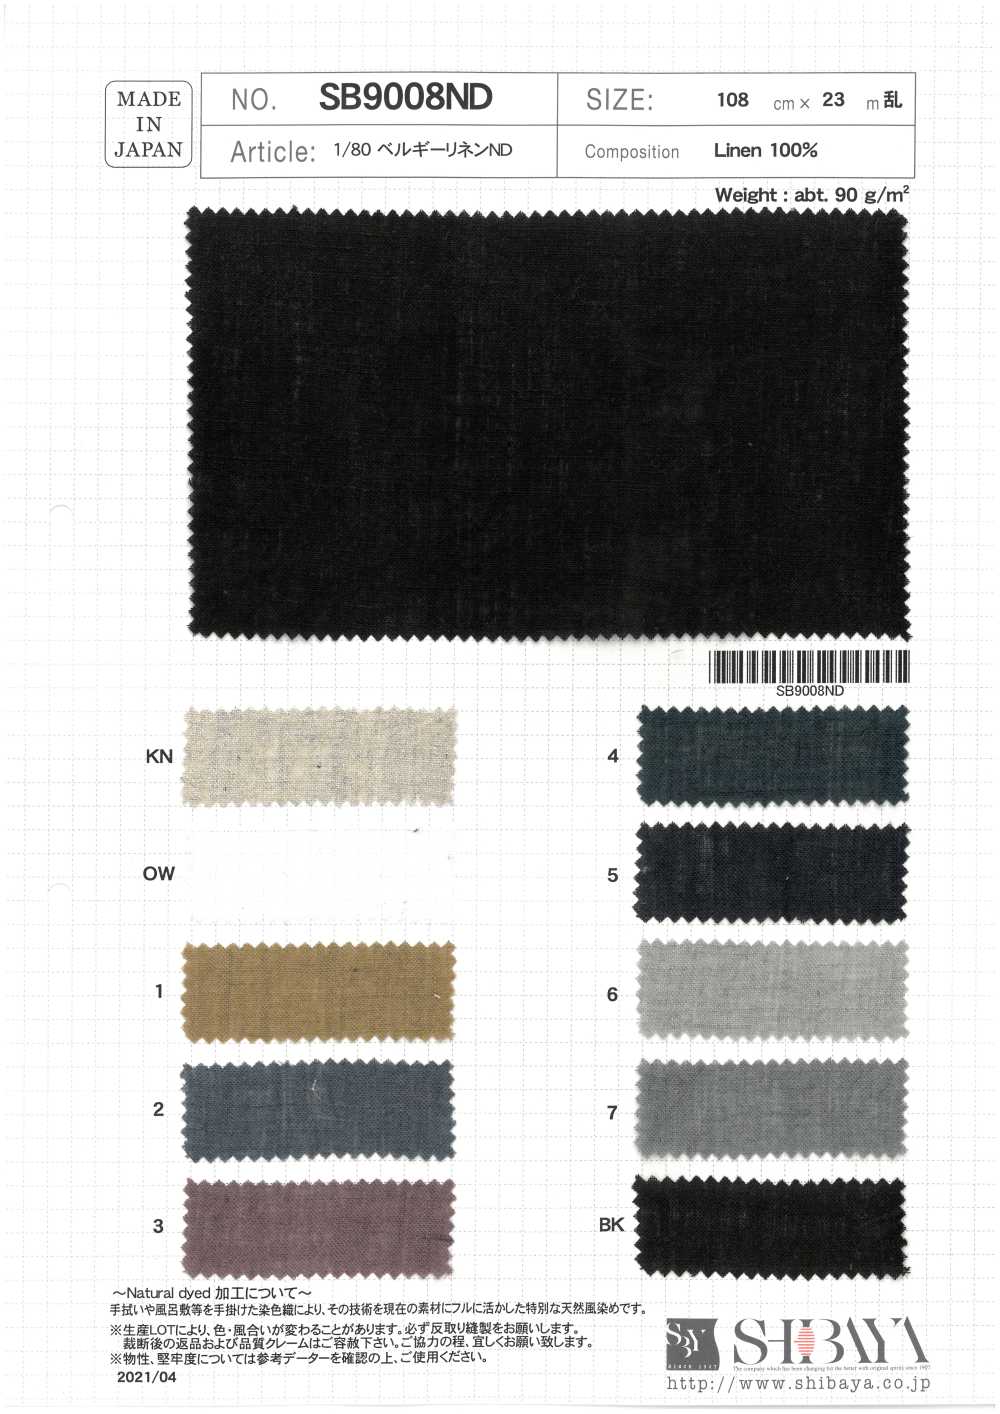 SB9008ND 1/80 Belgisches Leinen ND[Textilgewebe] SHIBAYA